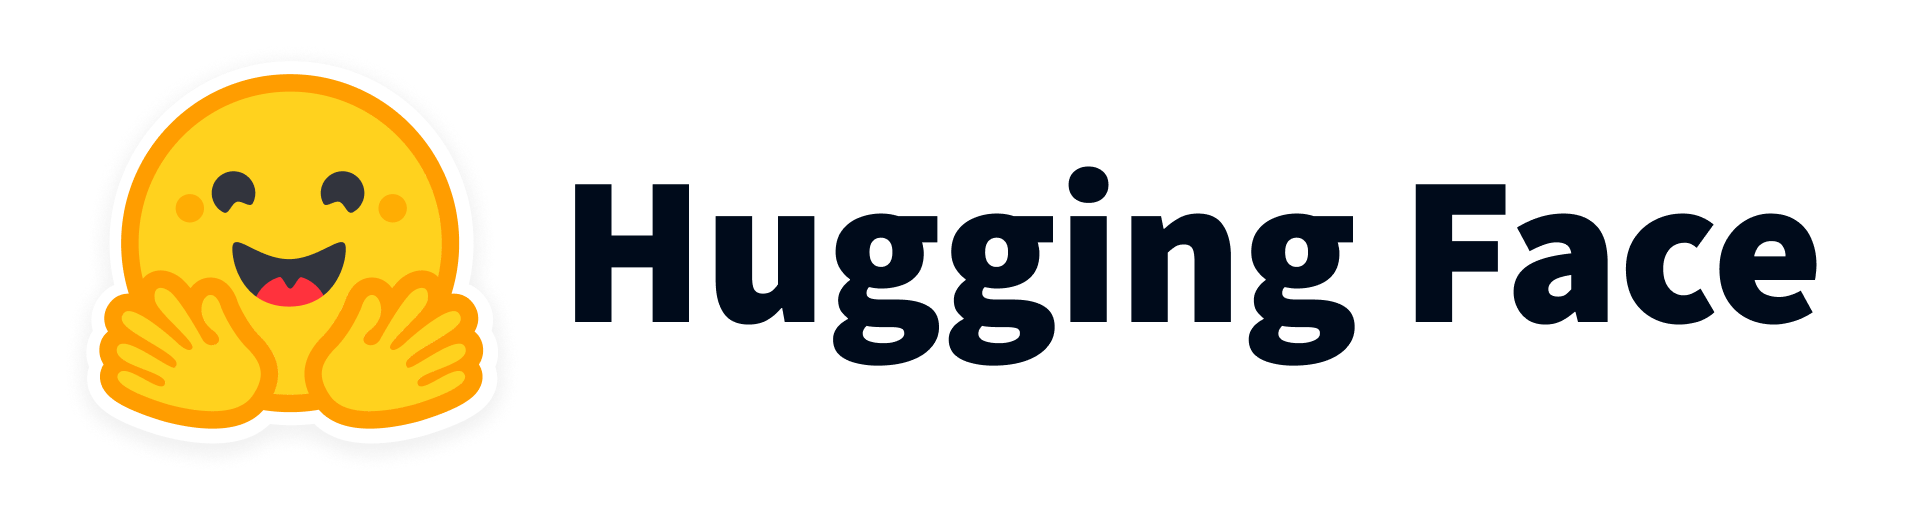 hugging face brand logo